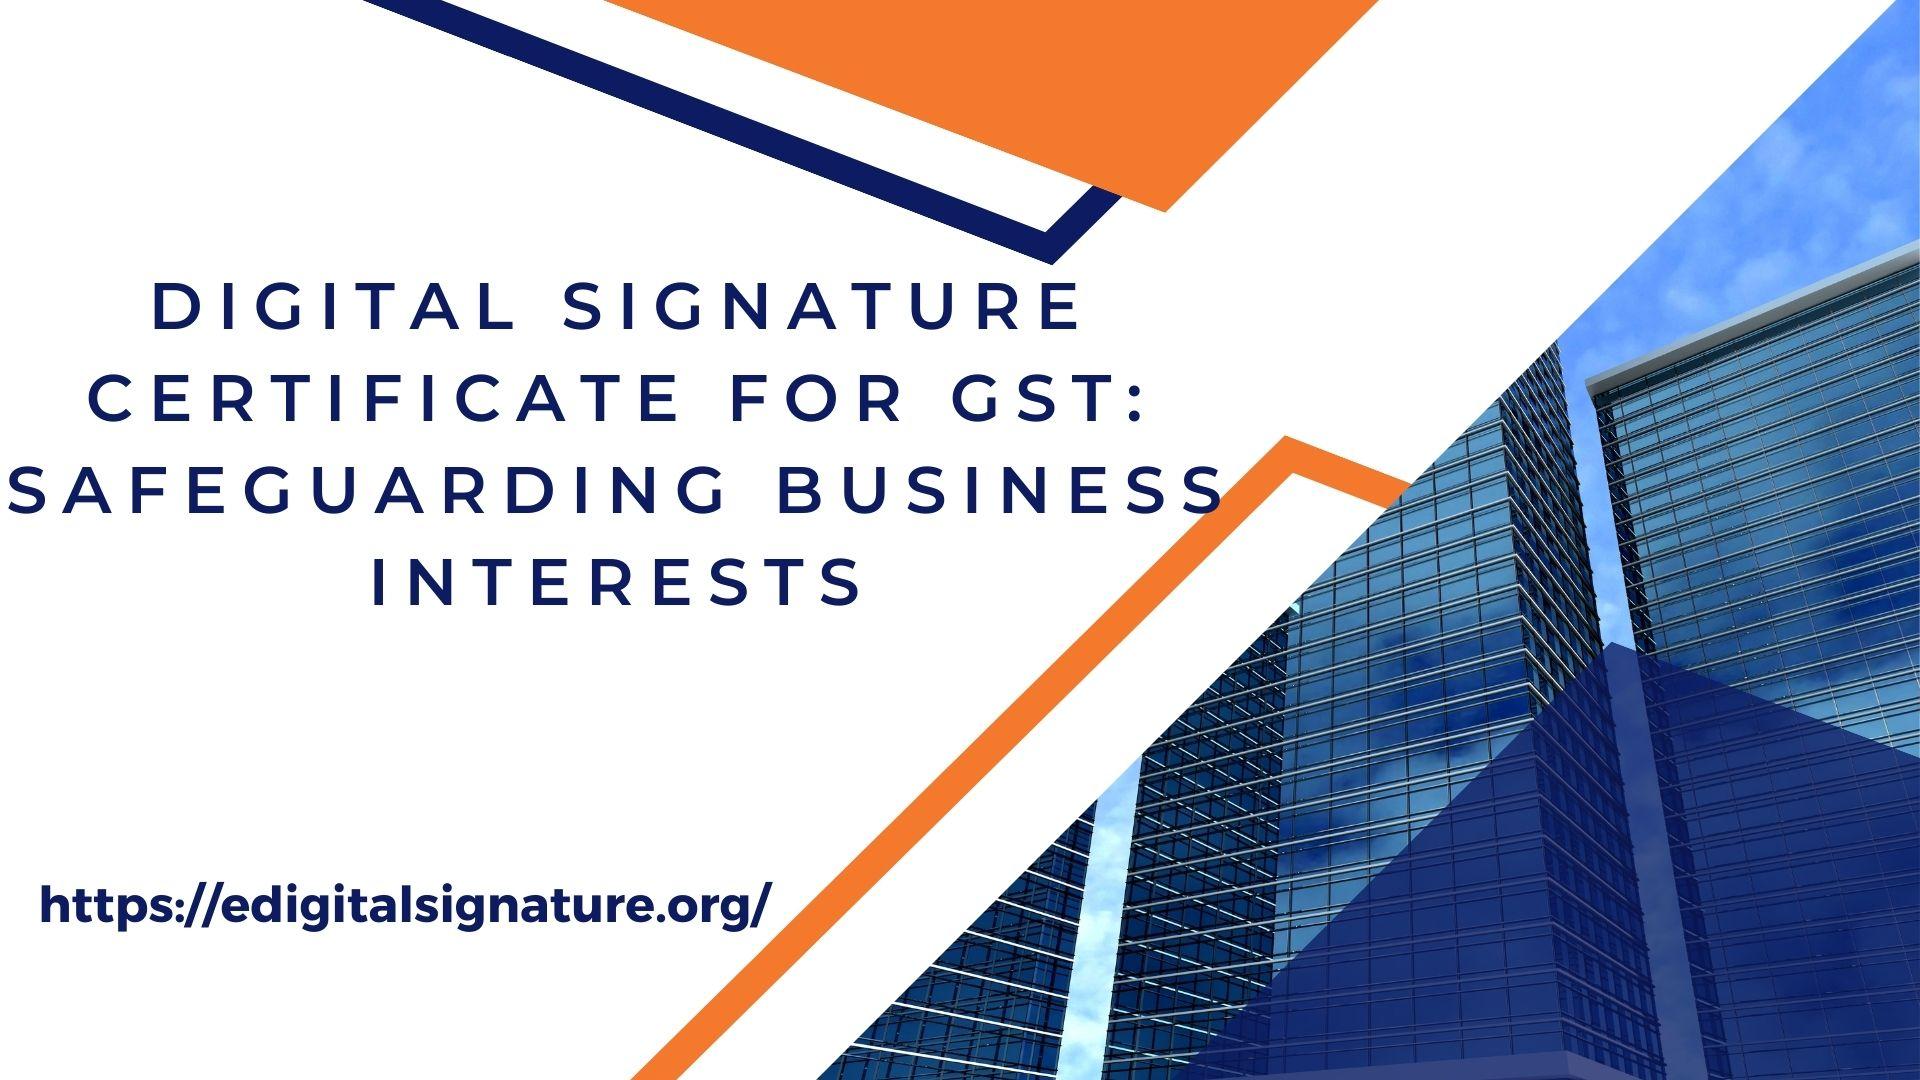 Digital Signature Certificate for GST: Safeguarding Business Interests